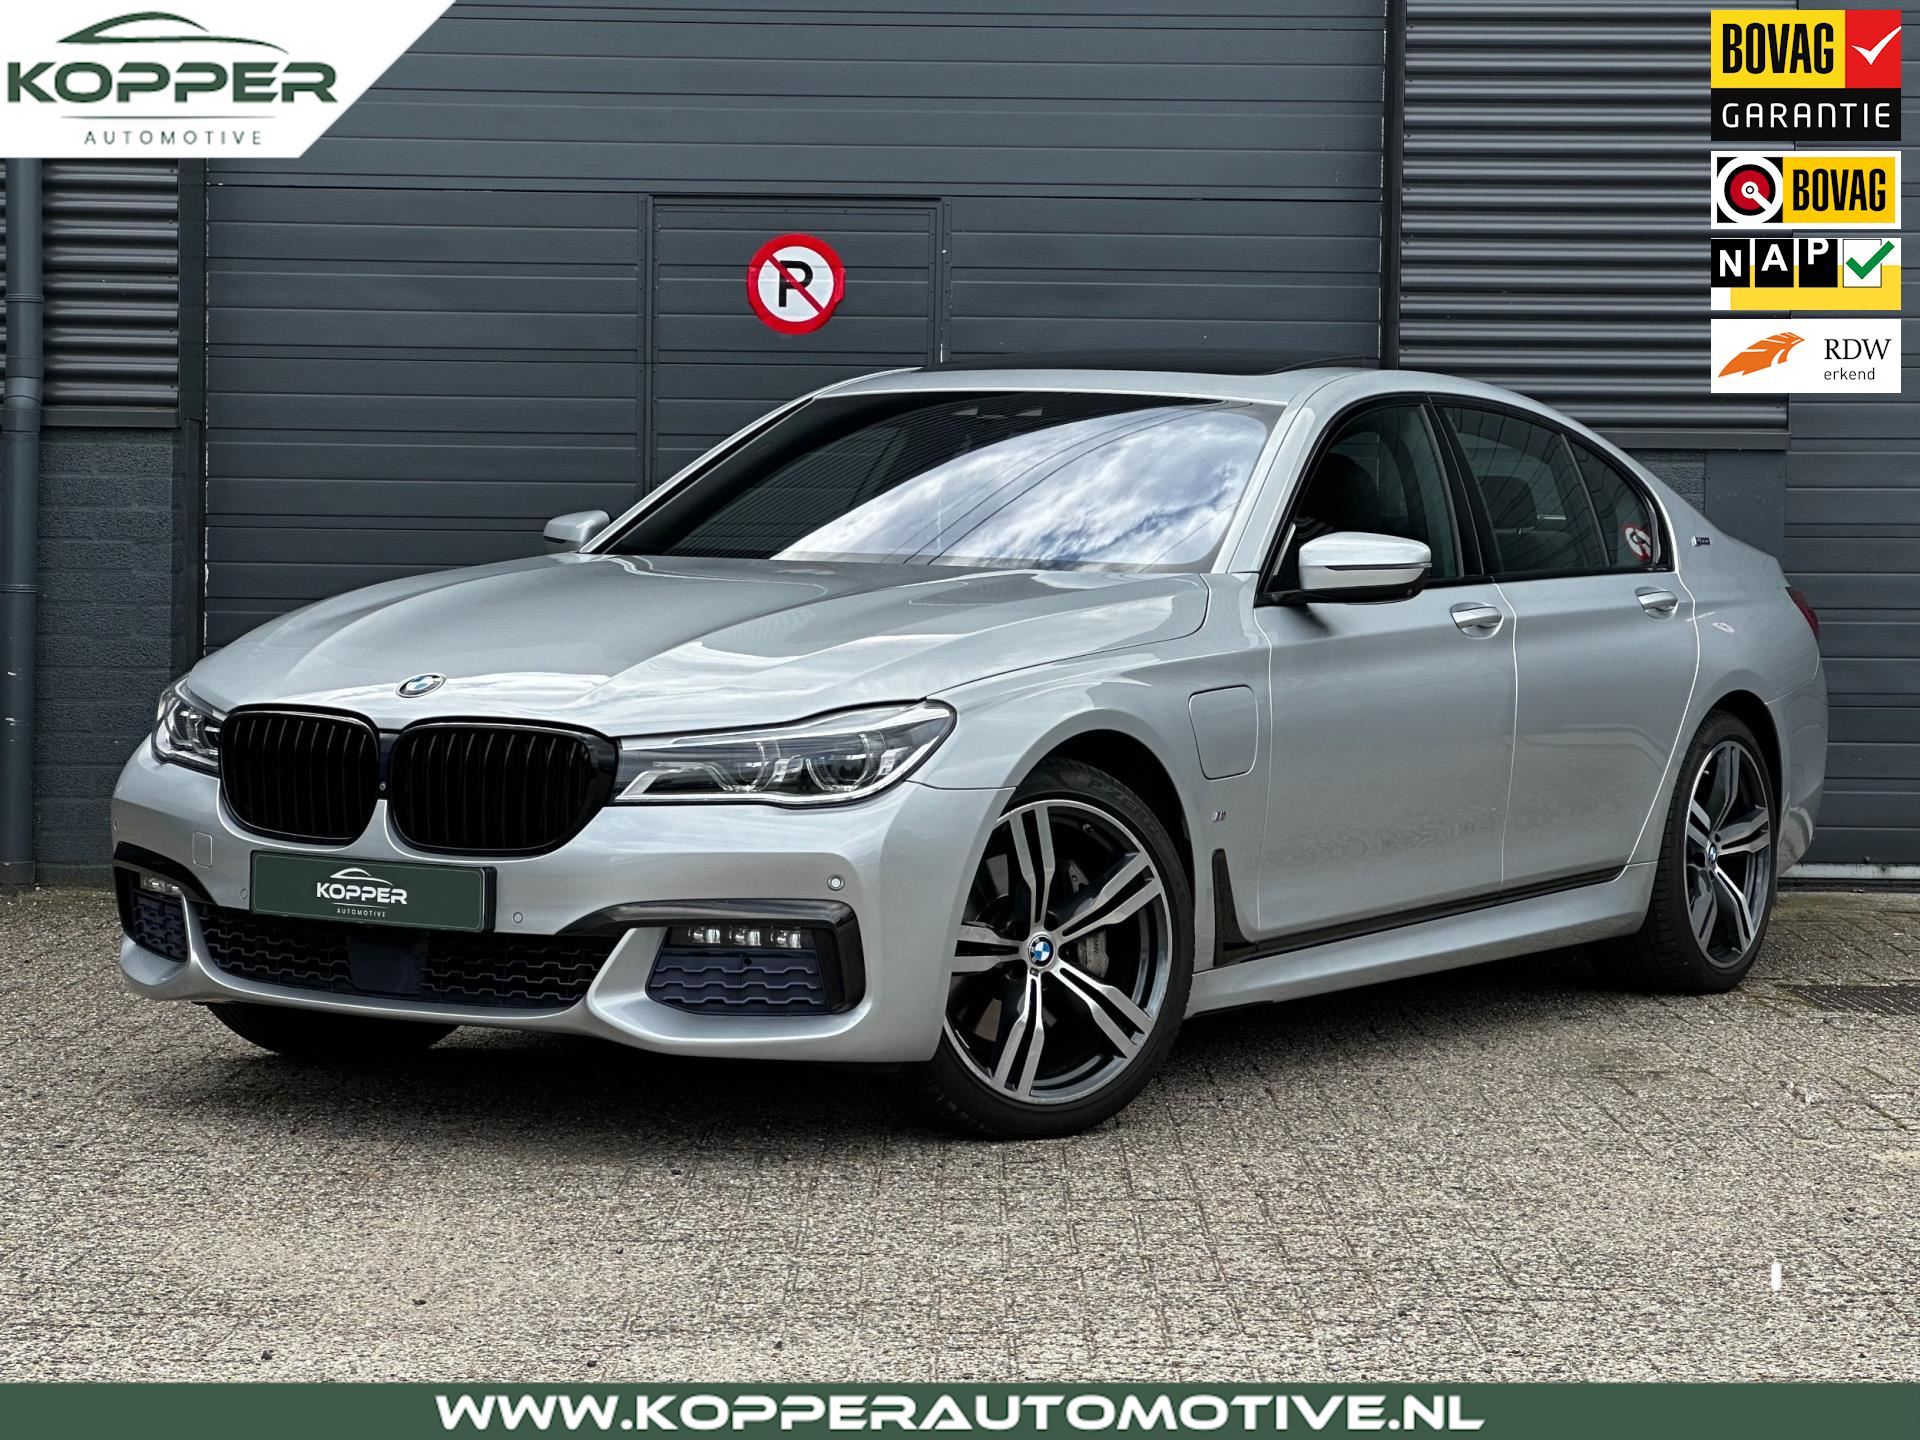 BMW 7-serie occasion - Kopper Automotive B.V.